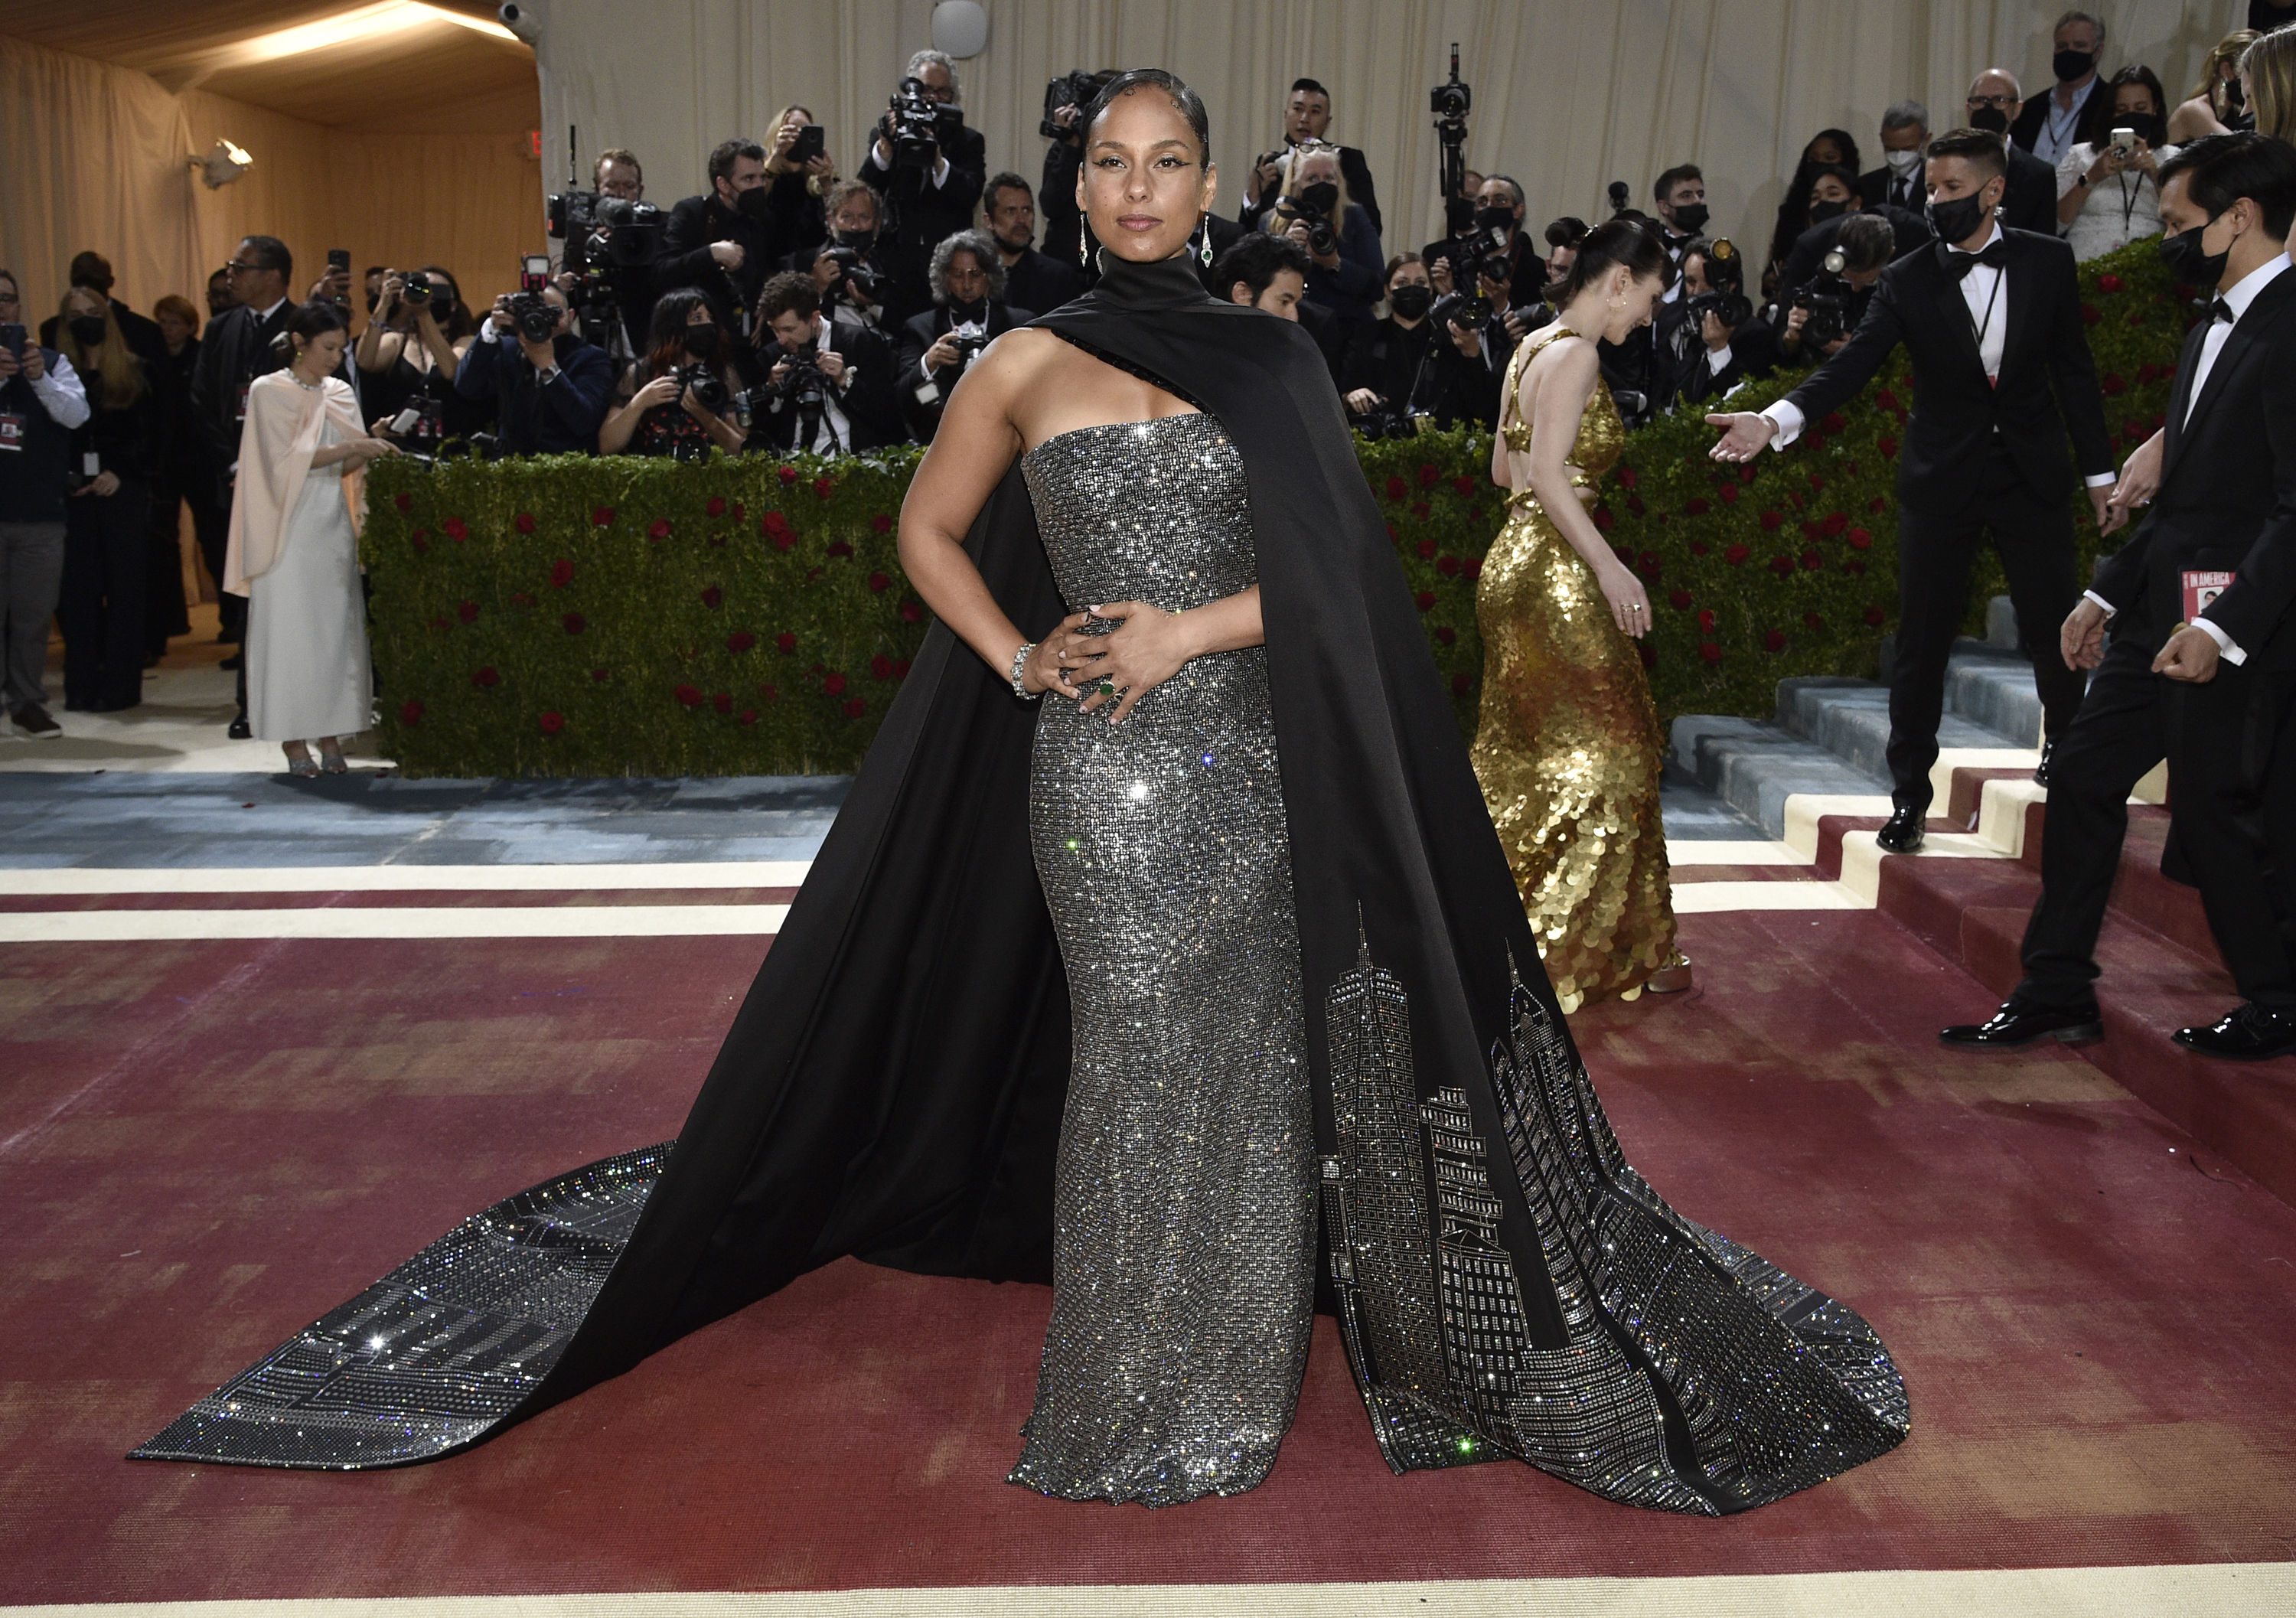 Alicia Keys attends The Metropolitan Museum of Art's Costume Institute benefit gala